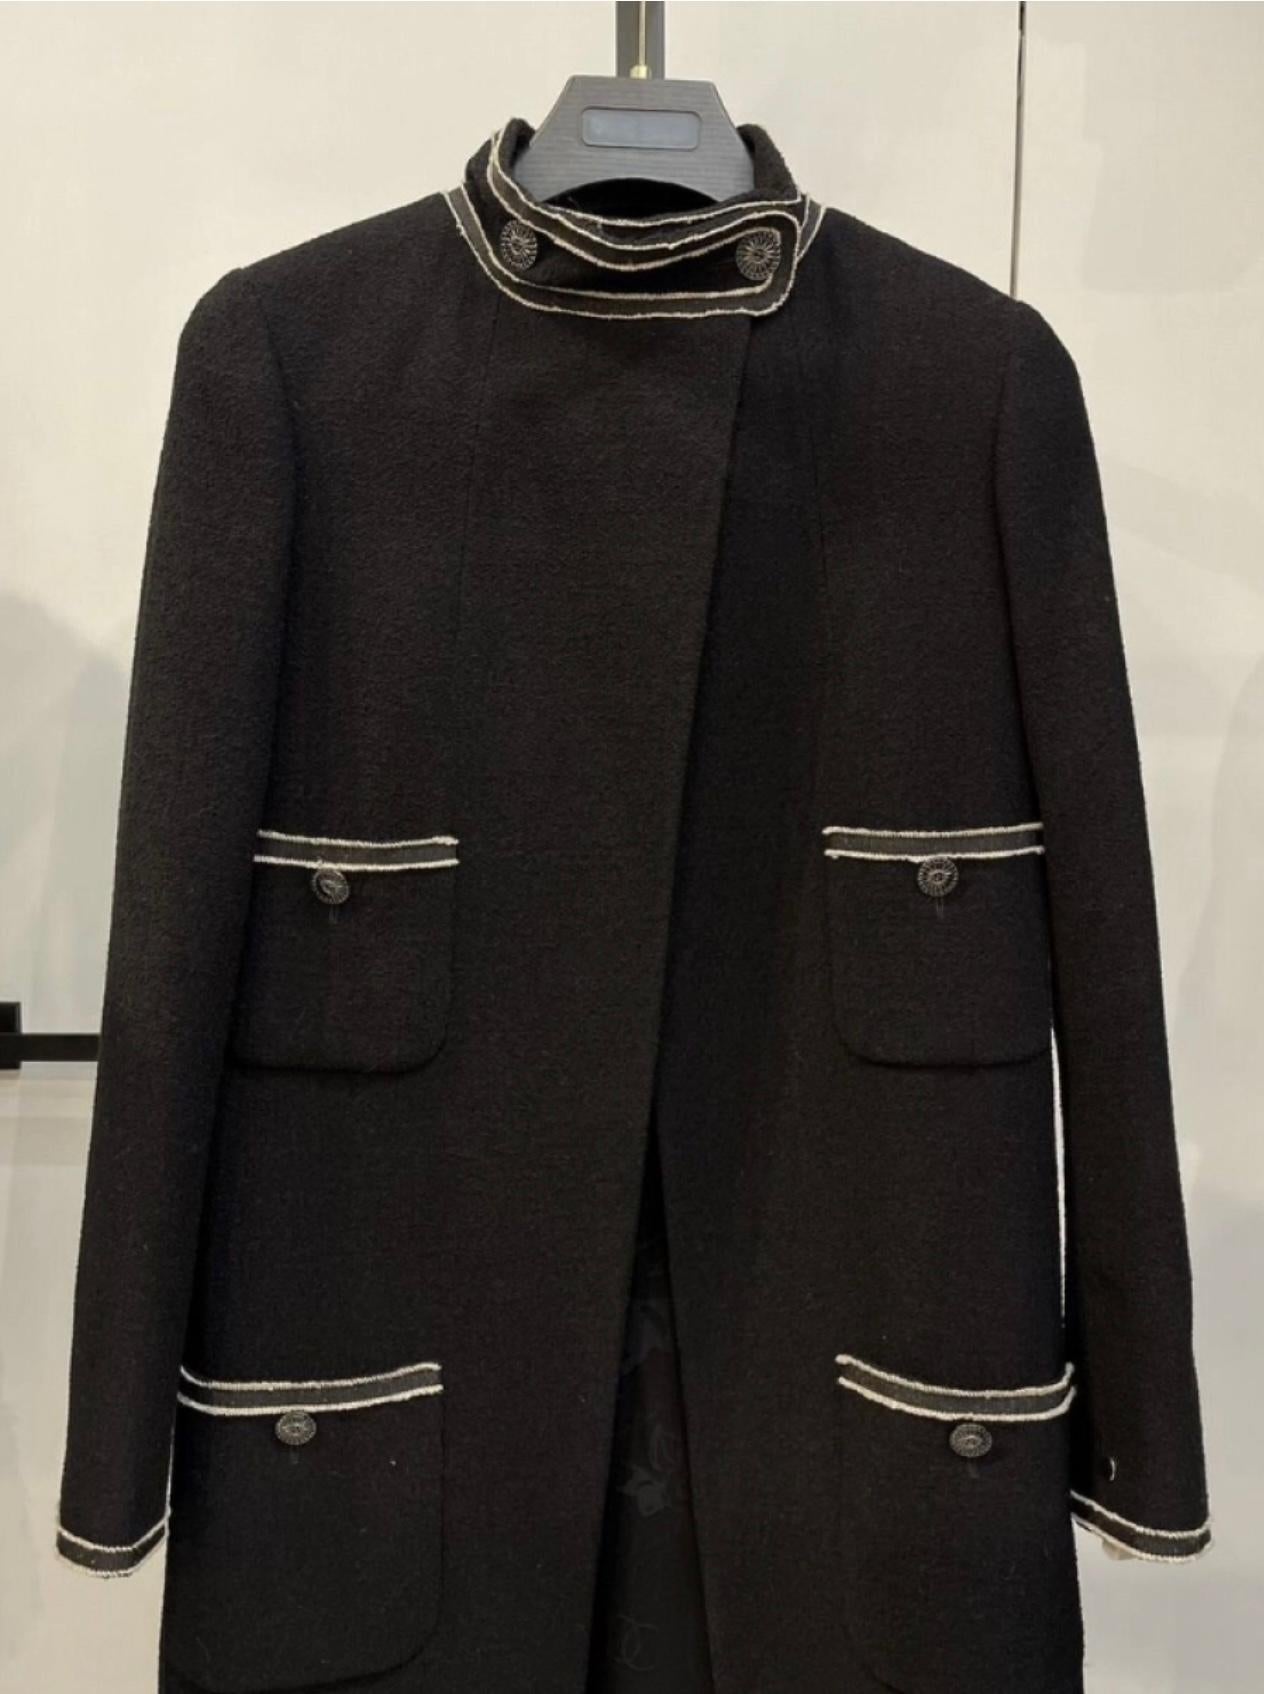 Chanel CC Buttons Paris / Singapore Runway Black Tweed Coat For Sale 7